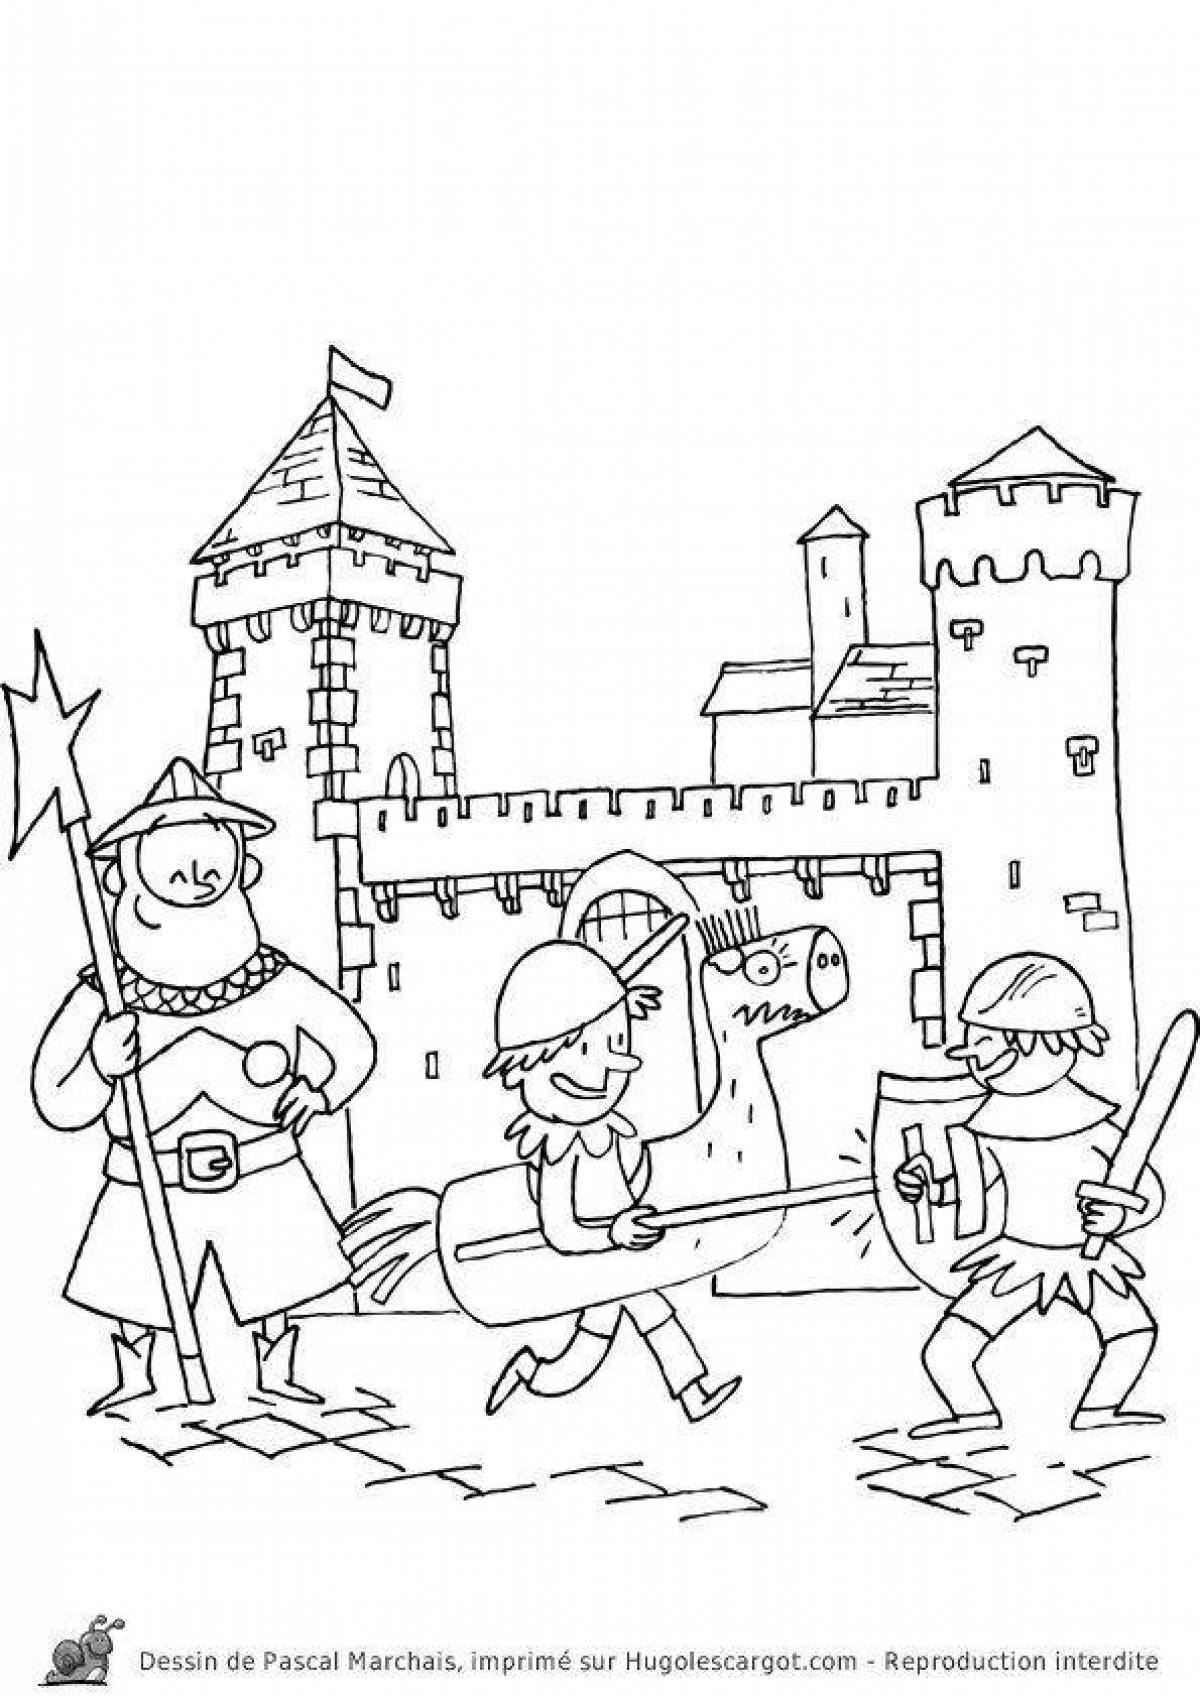 Раскраска грандиозный рыцарский замок